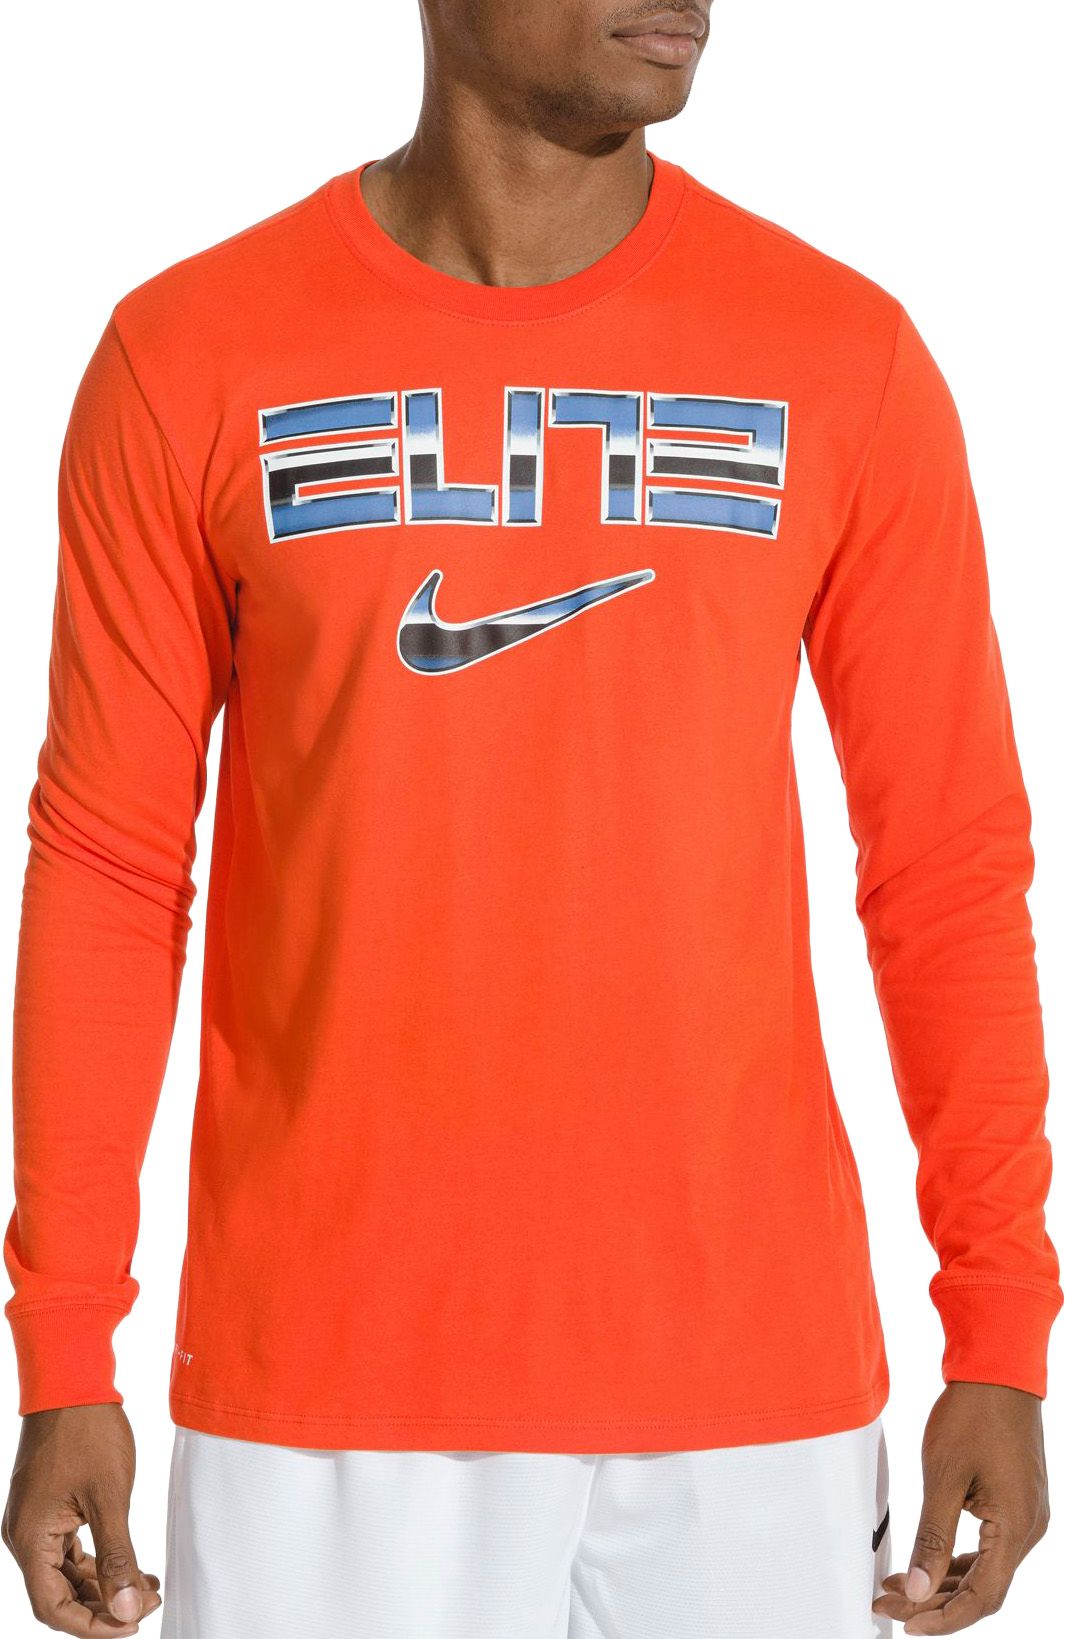 Nike Men's Dri-FIT Elite Basketball Long Sleeve Shirt - .97